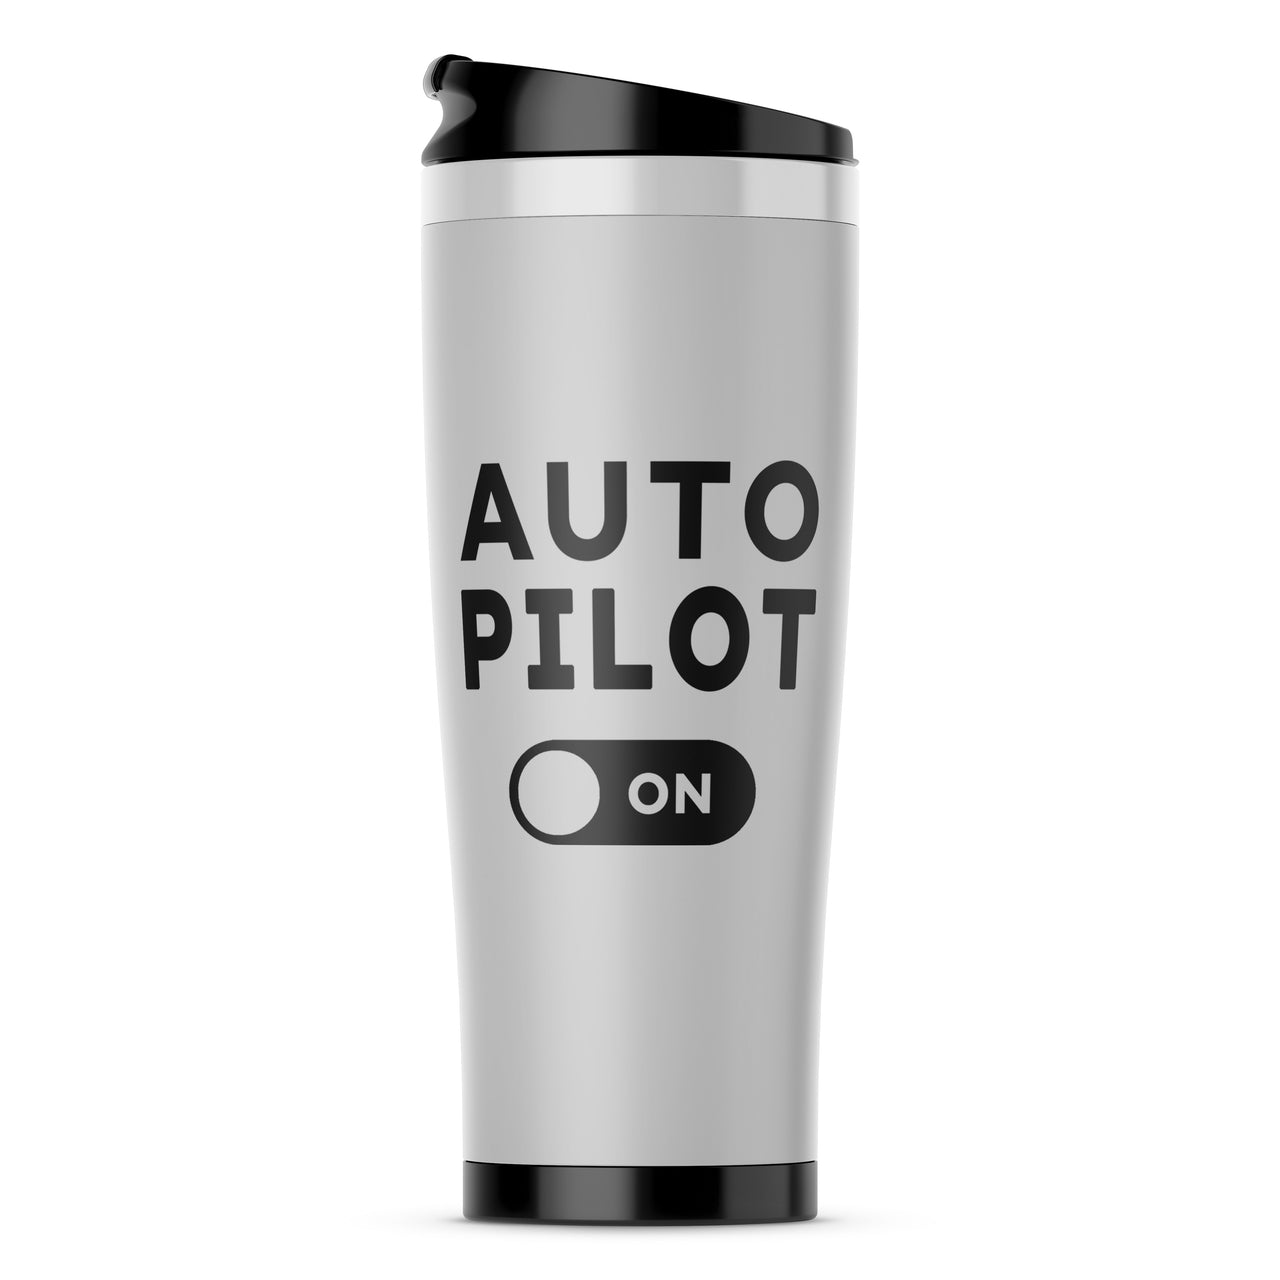 Auto Pilot ON Designed Travel Mugs